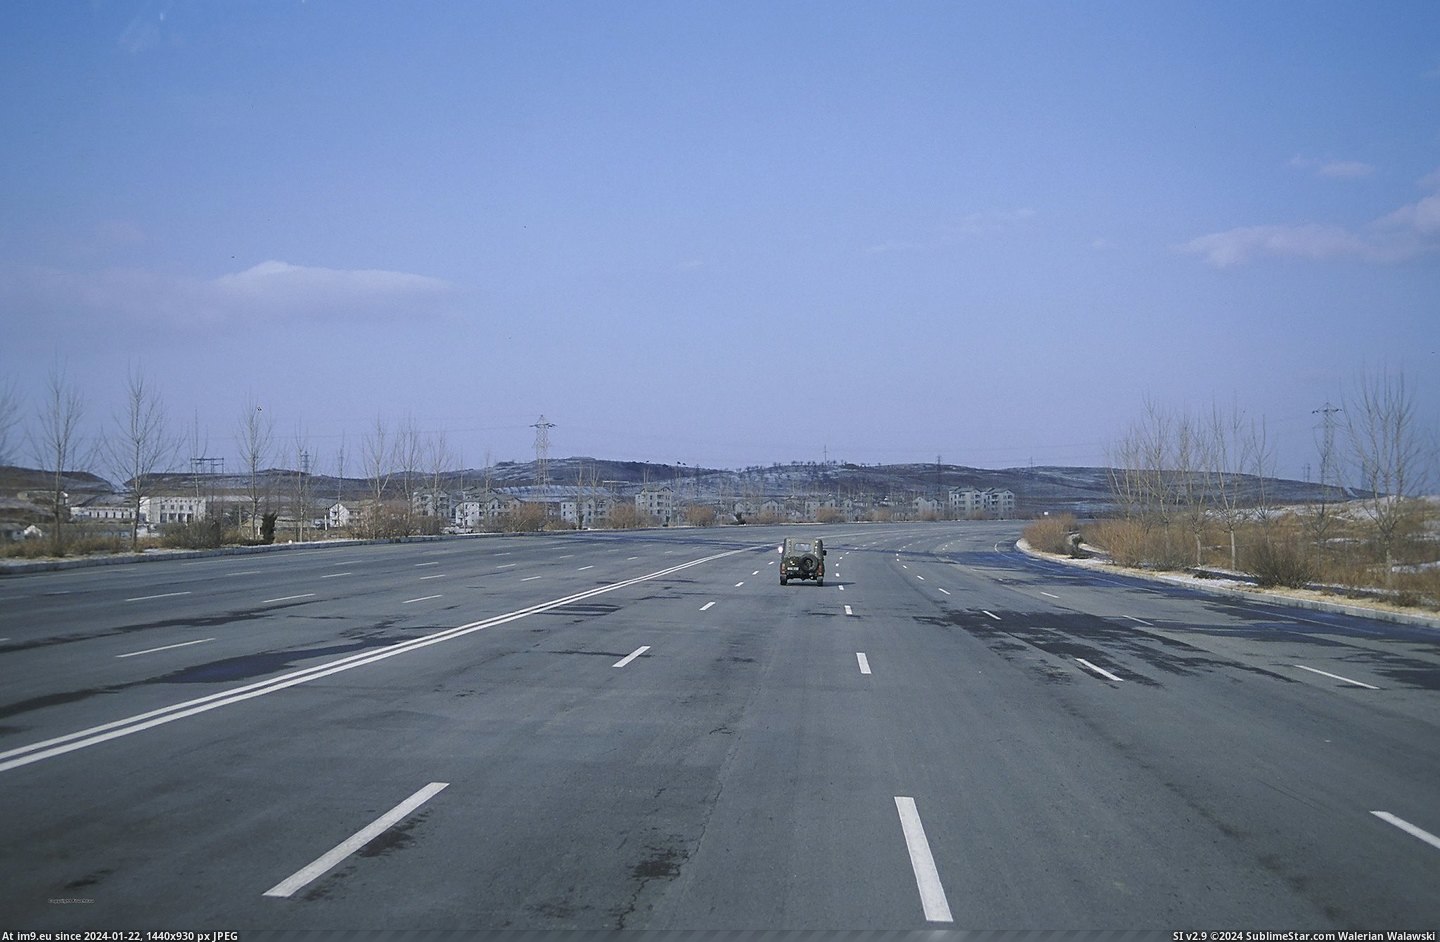 #North #Empty #Highways #Korea [Pics] The empty highways of North Korea. Pic. (Bild von album My r/PICS favs))